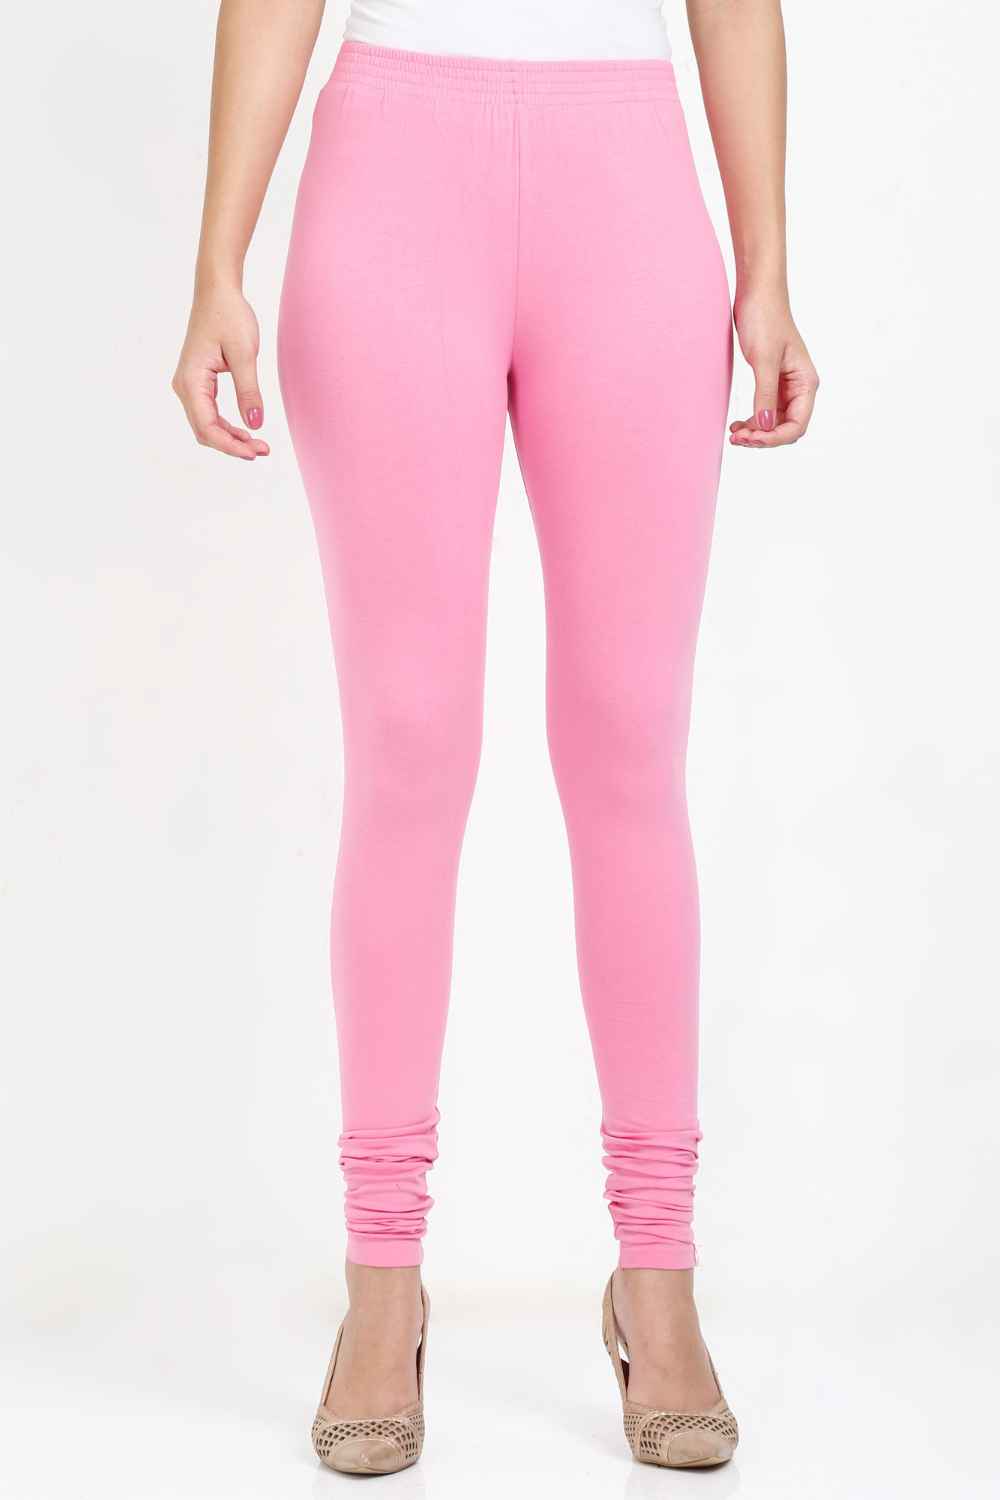 LuLaRoe Womens Leggings Tall and Curvy Pink Geometric Soft Full Length |  eBay